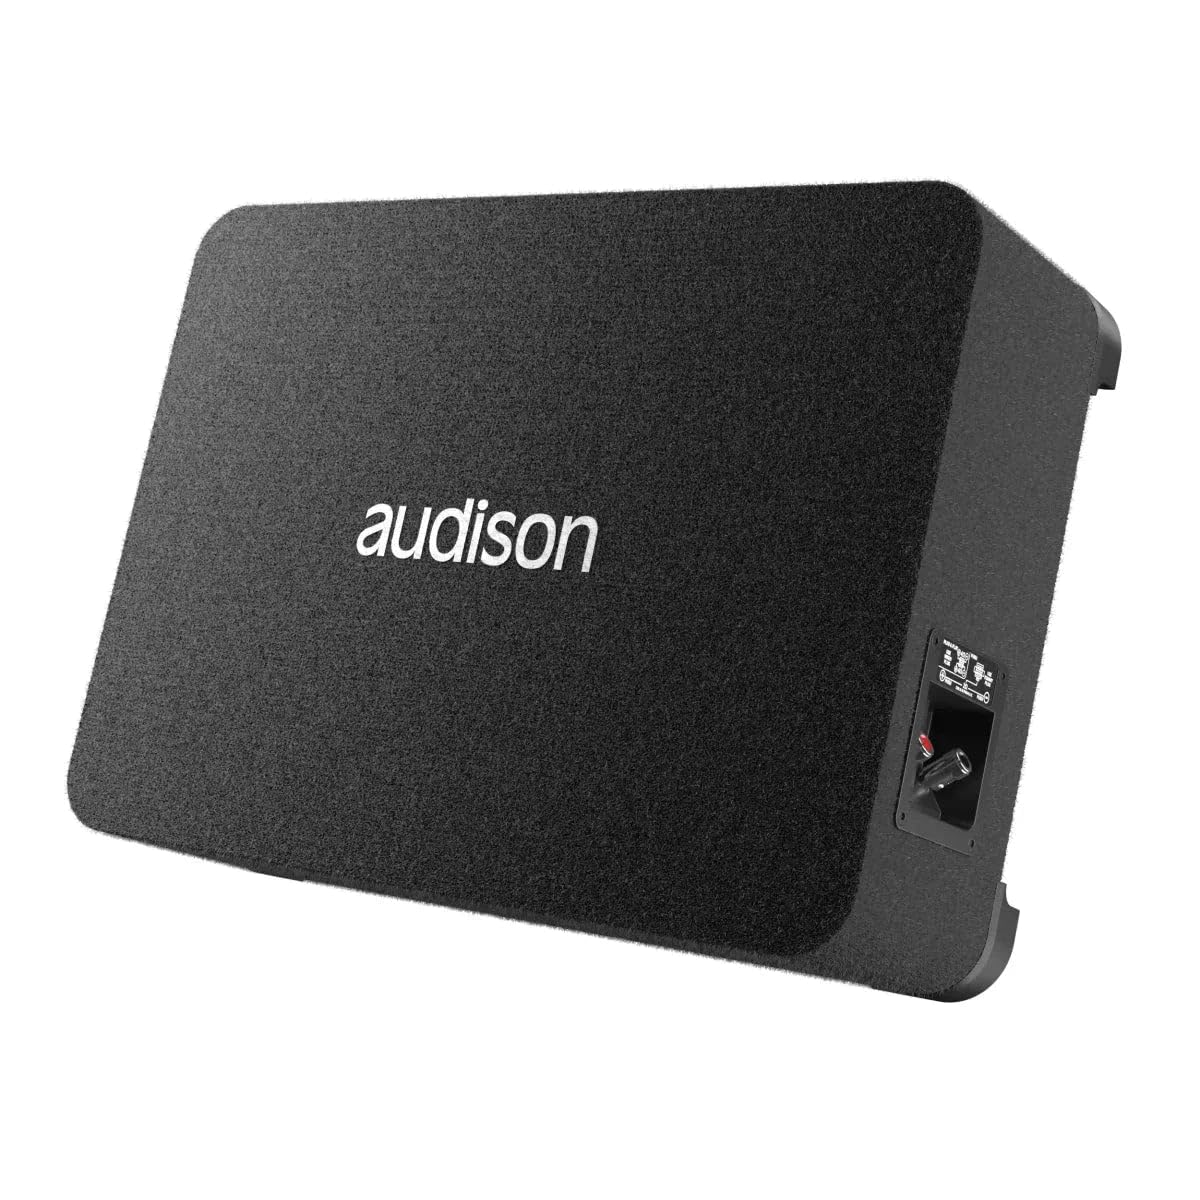 Audison - Prima apbx 10 DS von Audison